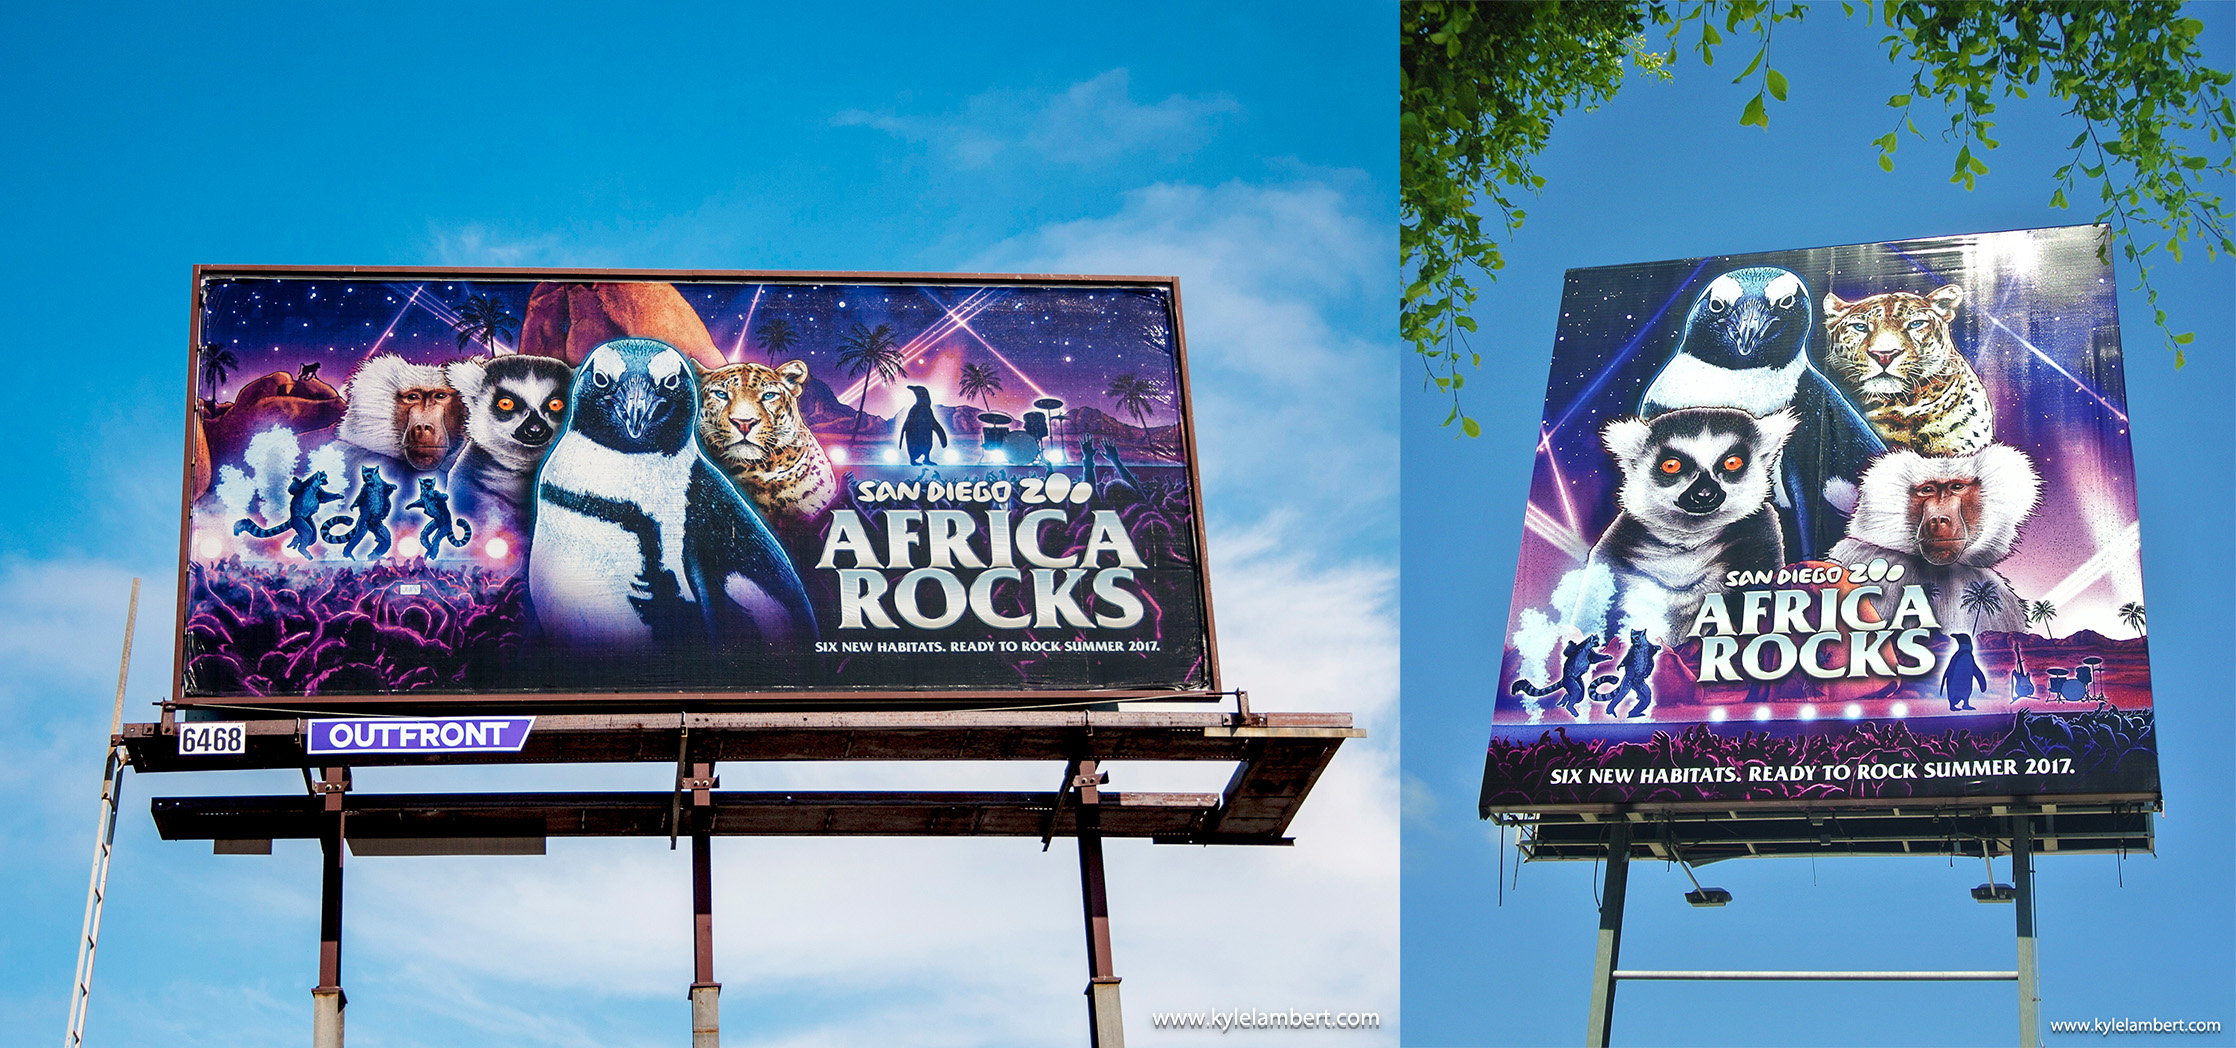 Africa Rocks San Diego Zoo Billboard 1